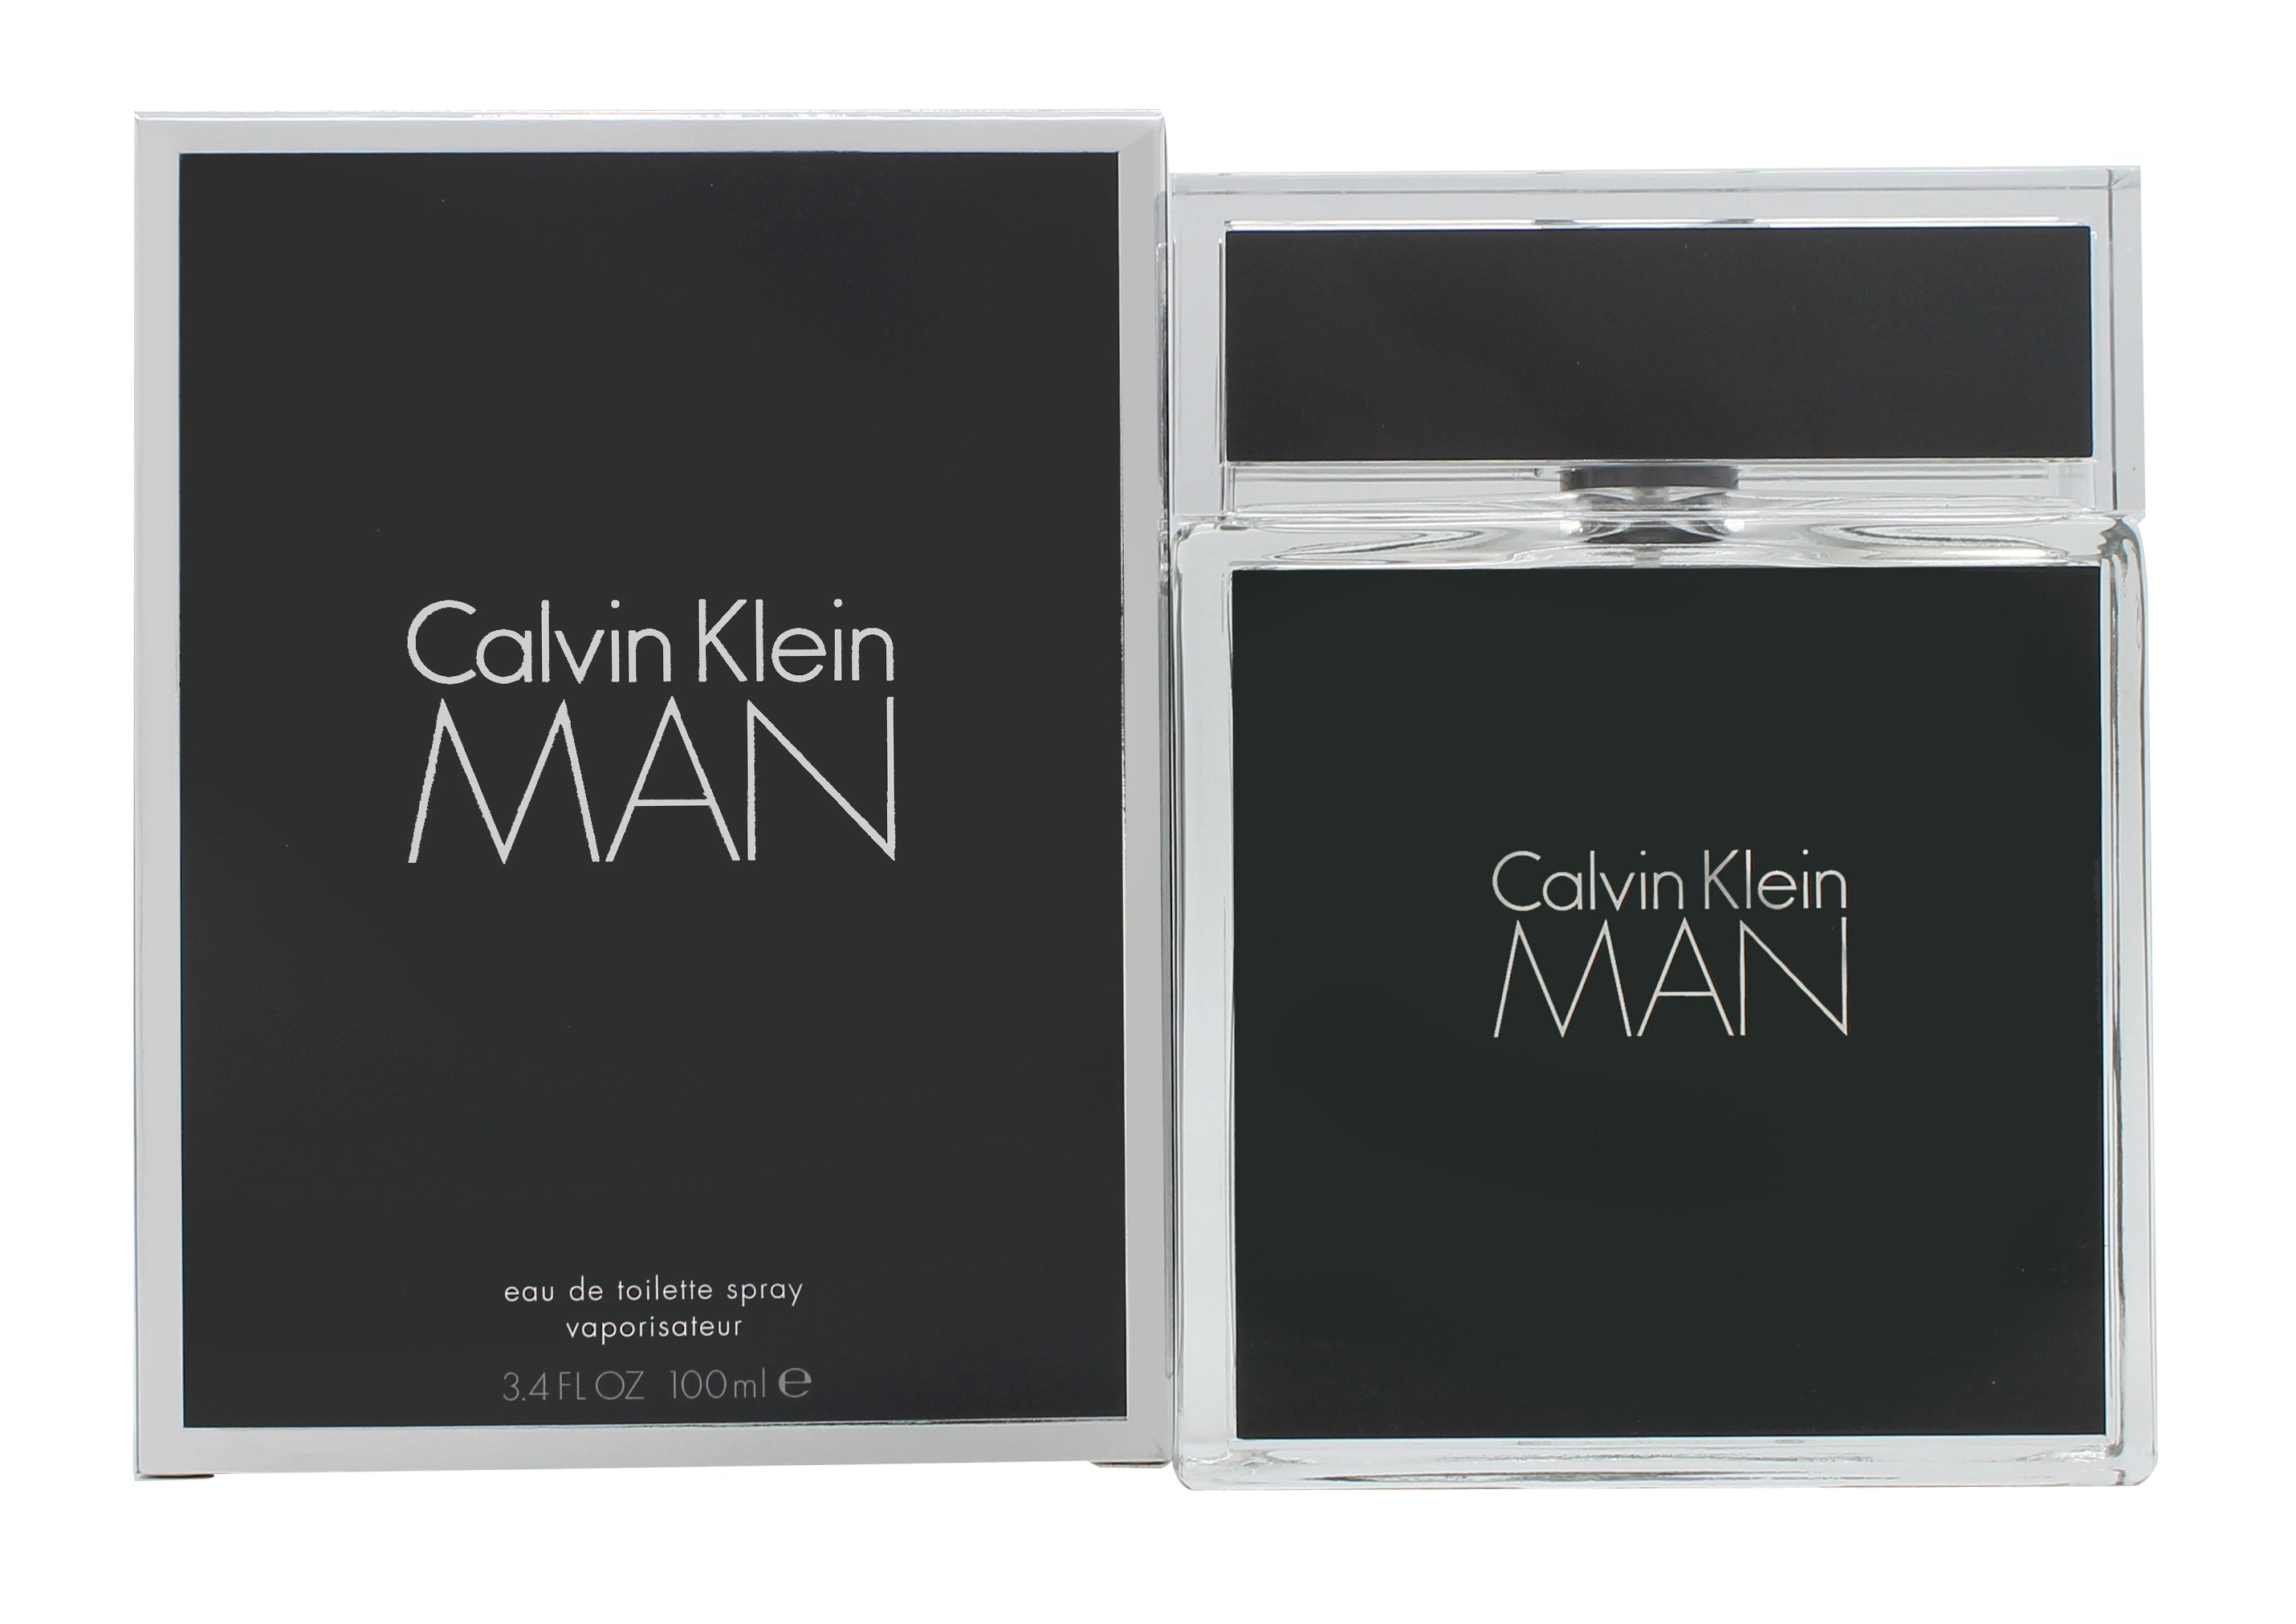 View Calvin Klein CK Man Eau de Toilette 100ml Spray information